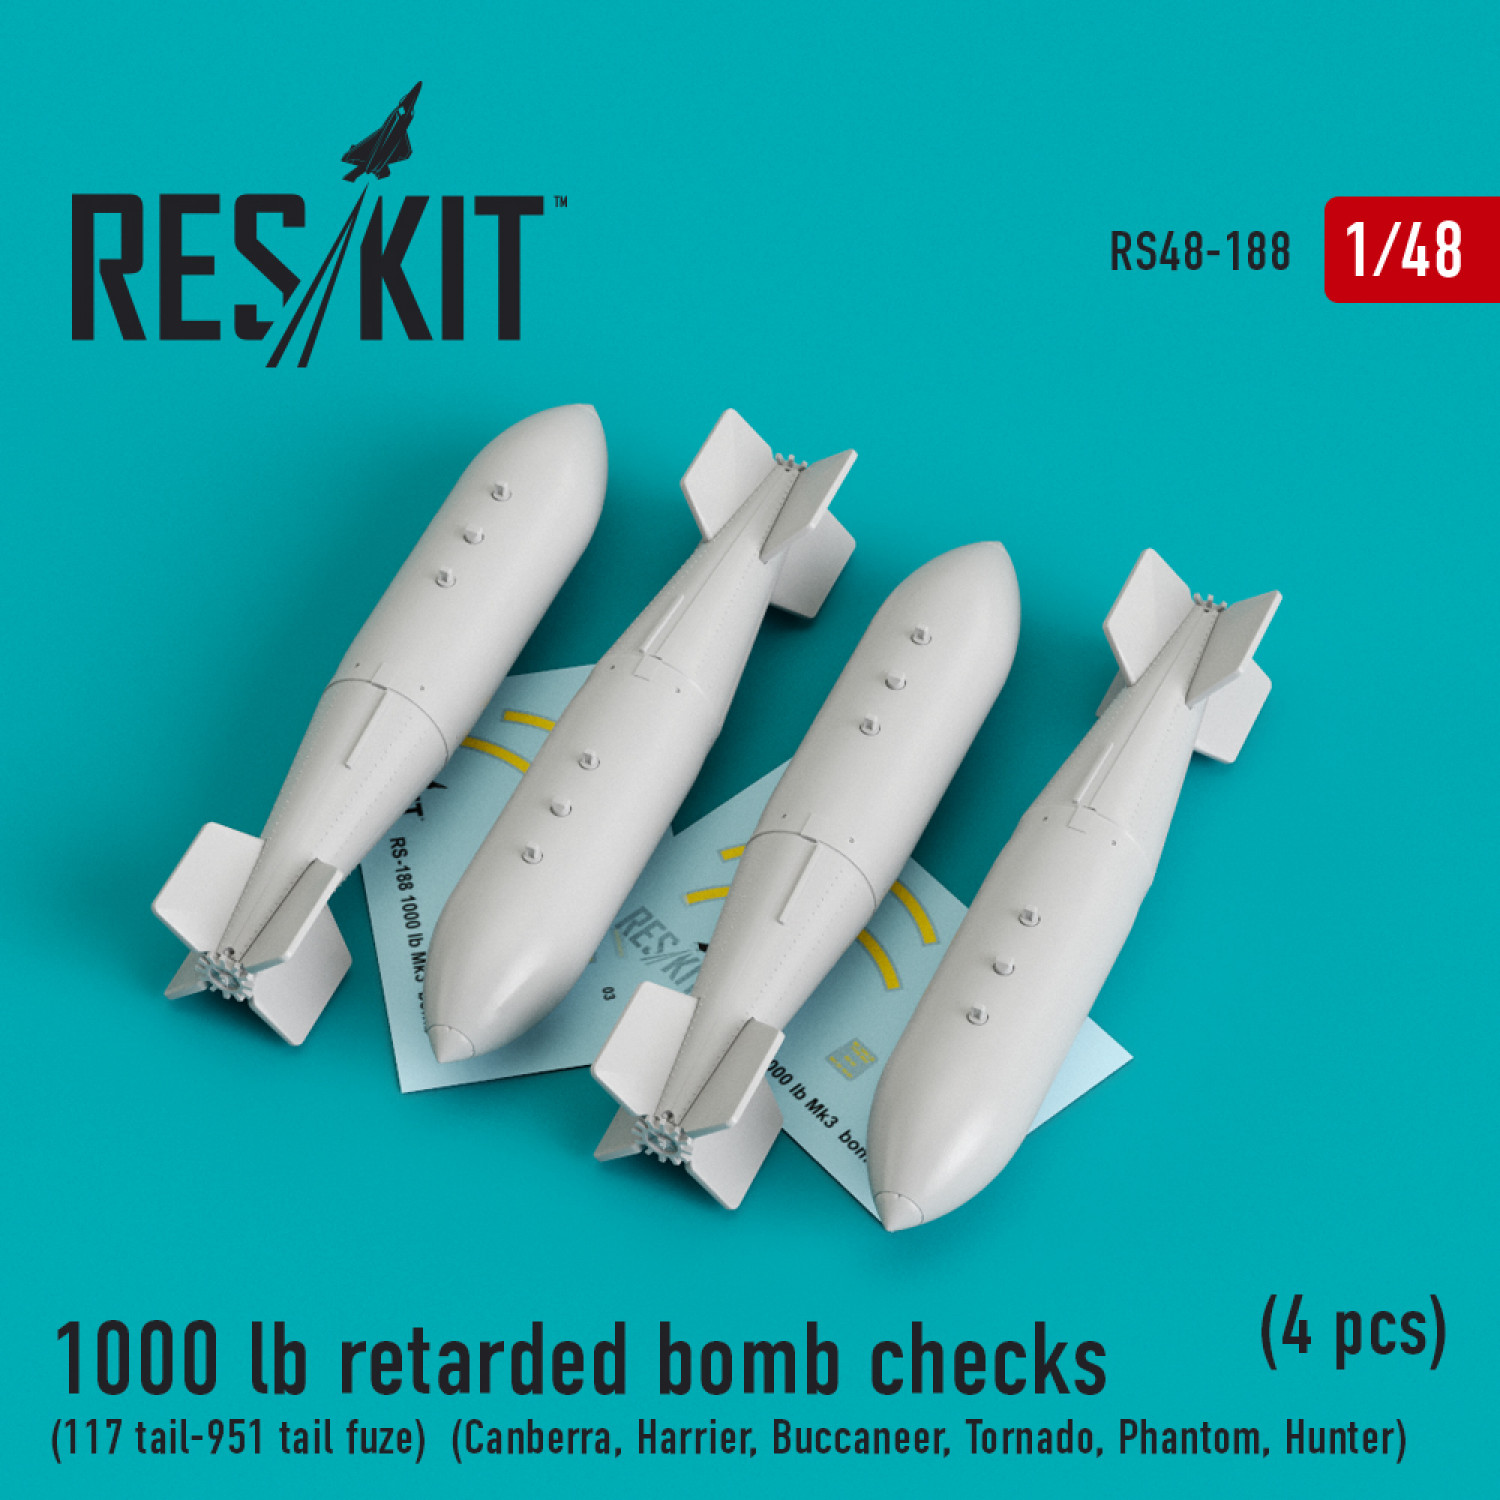 1000 lb retarded bomb checks